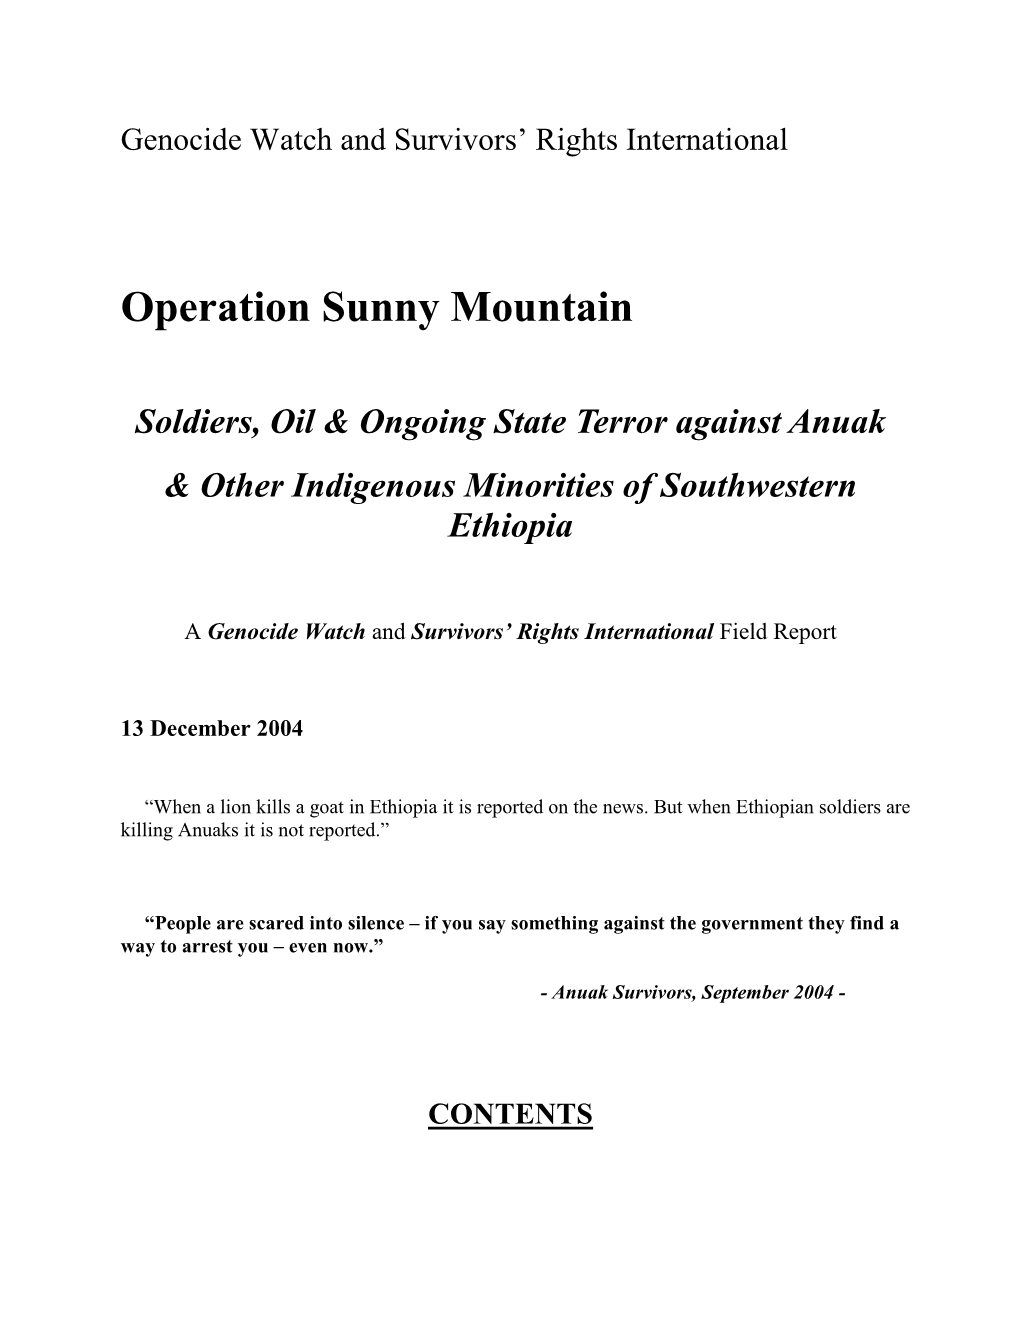 Operation Sunny Mountain